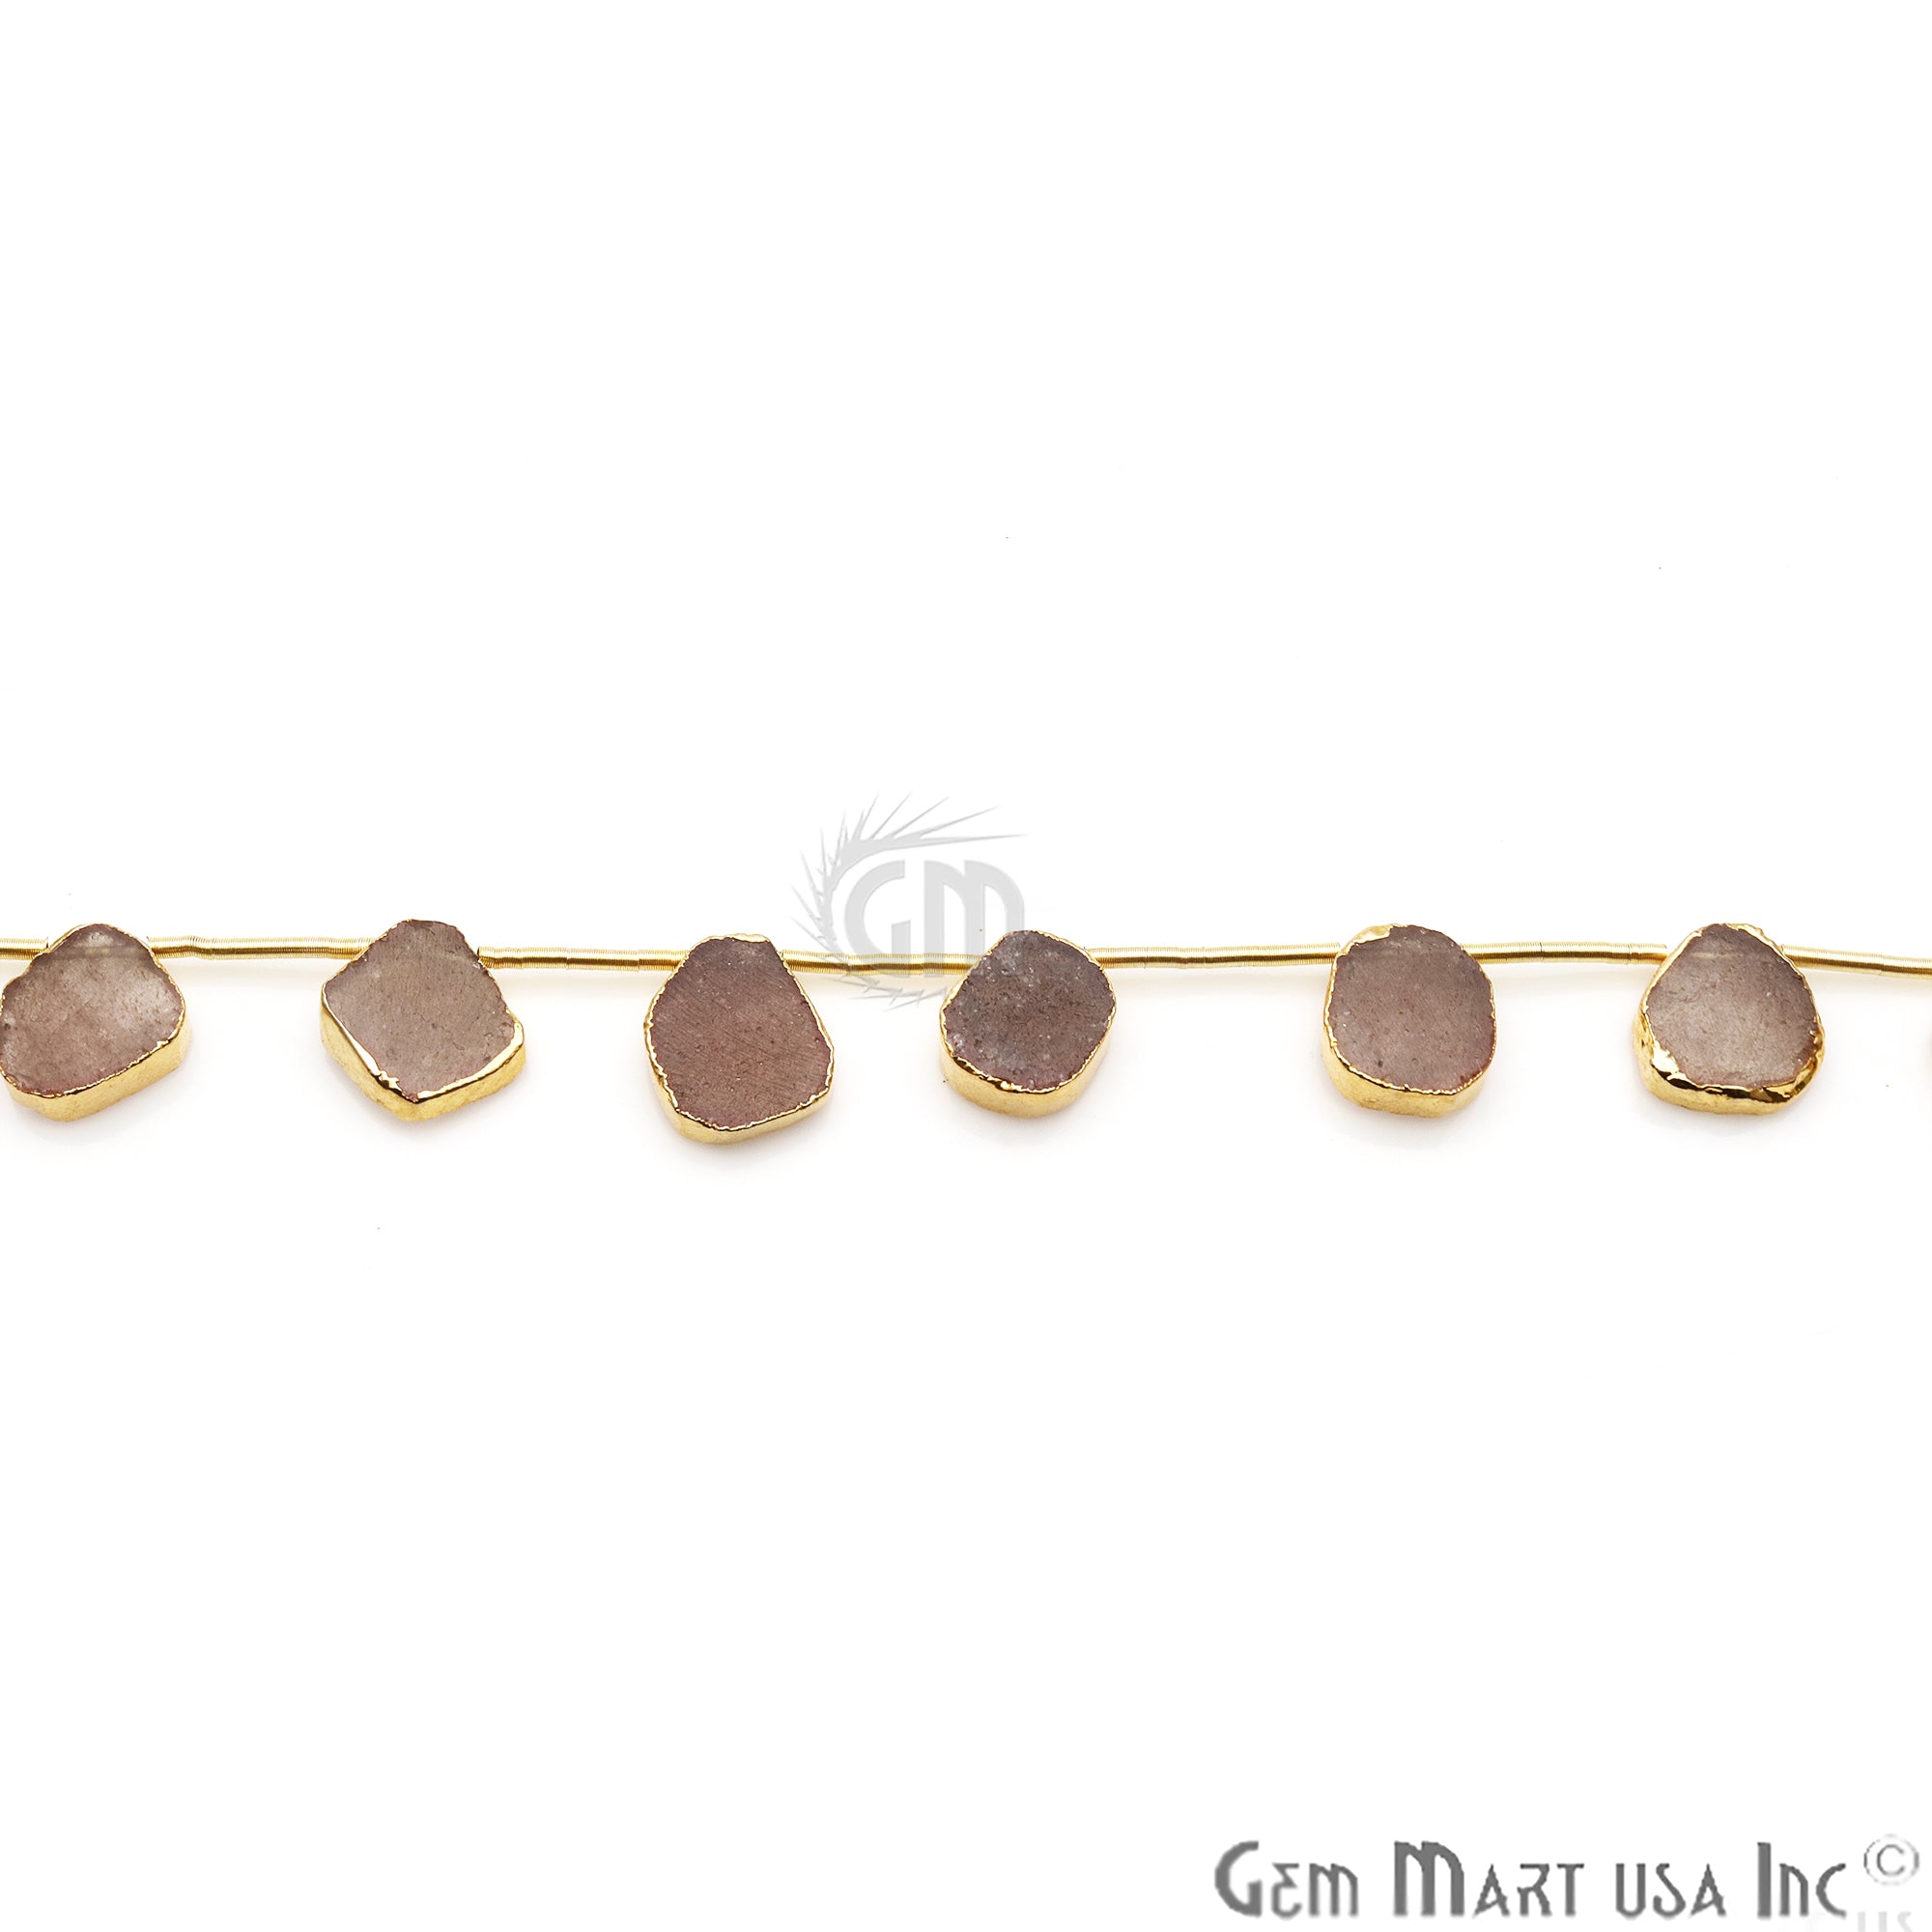 Strawberry Quartz Free Form Gold Electroplated 18x15mm Crafting Beads Gemstone 9 Inch Strands - GemMartUSA